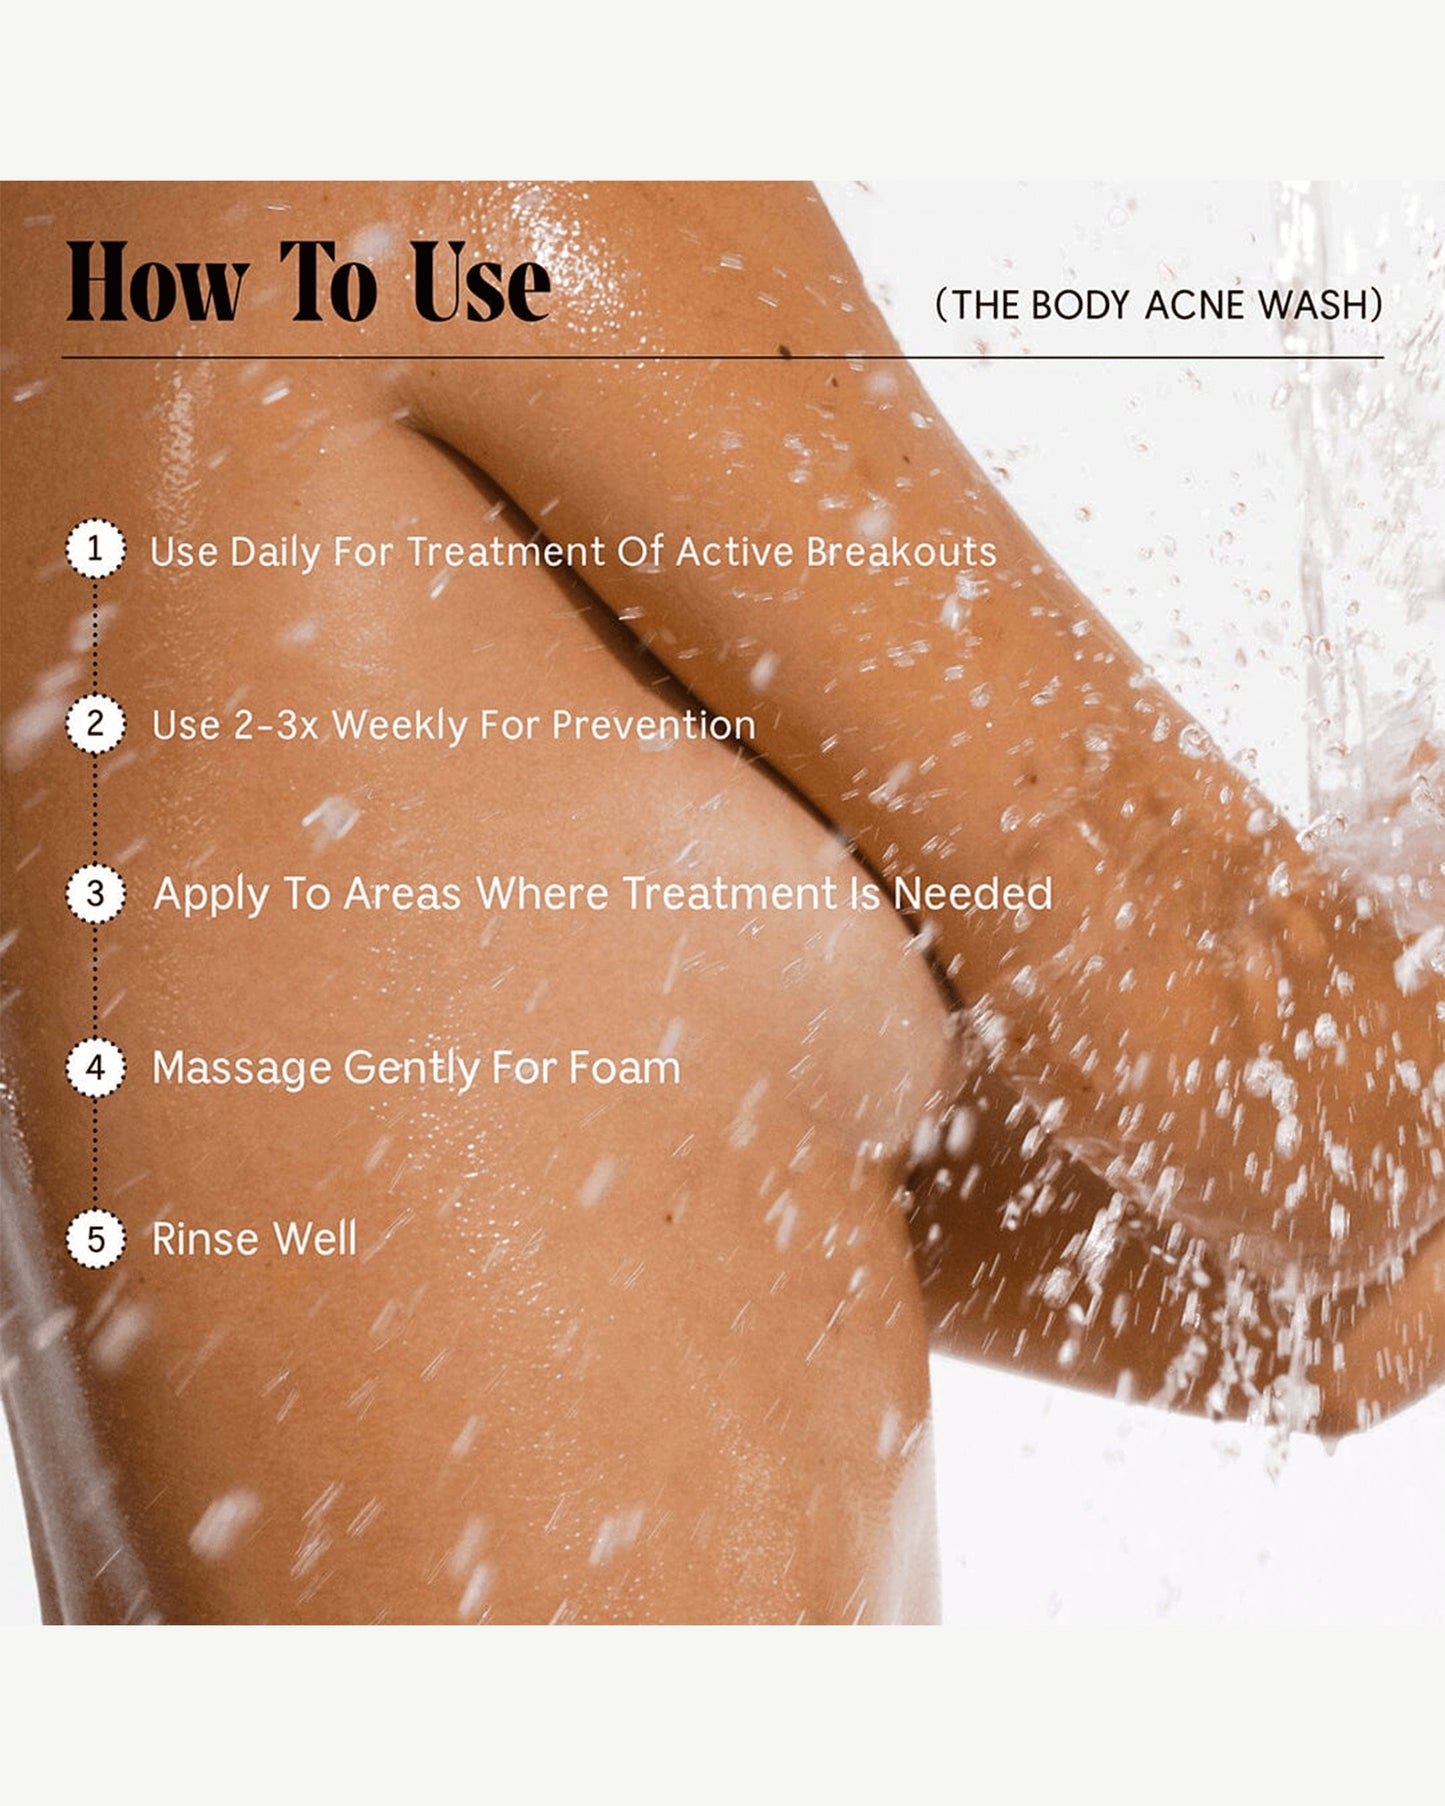 The Body Acne Wash